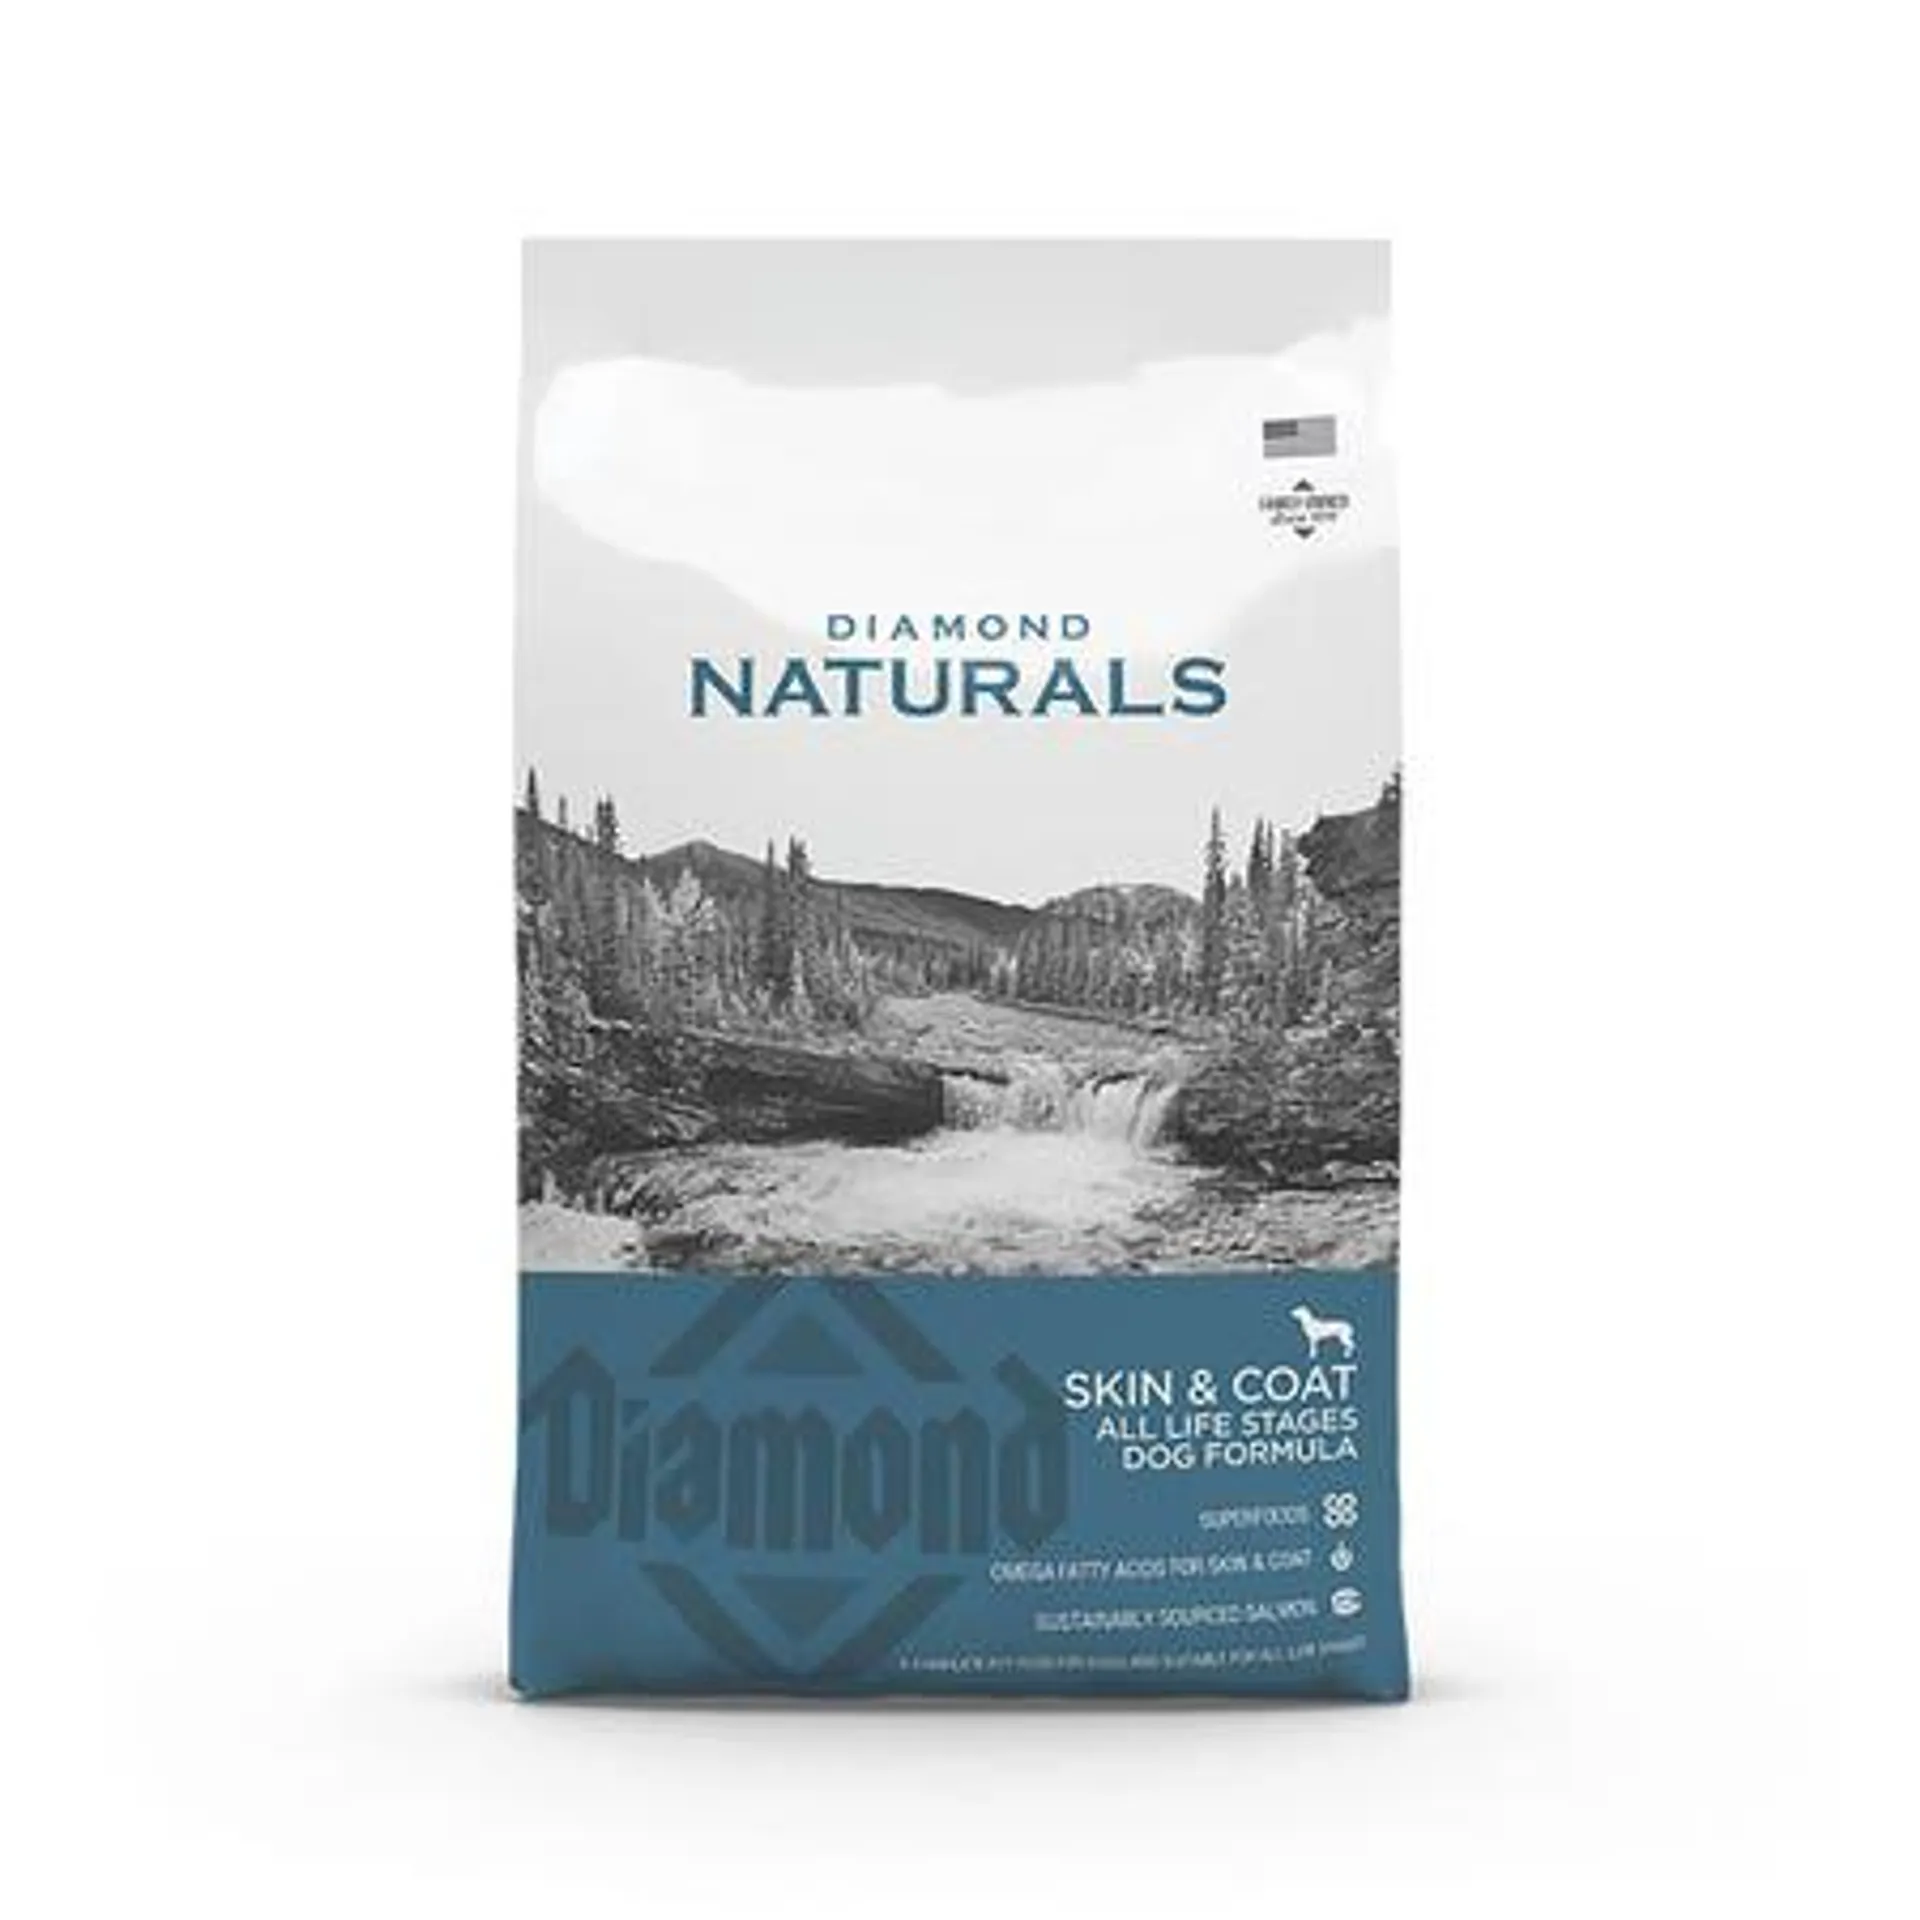 Diamond Naturals Skin & Coat Dog Food